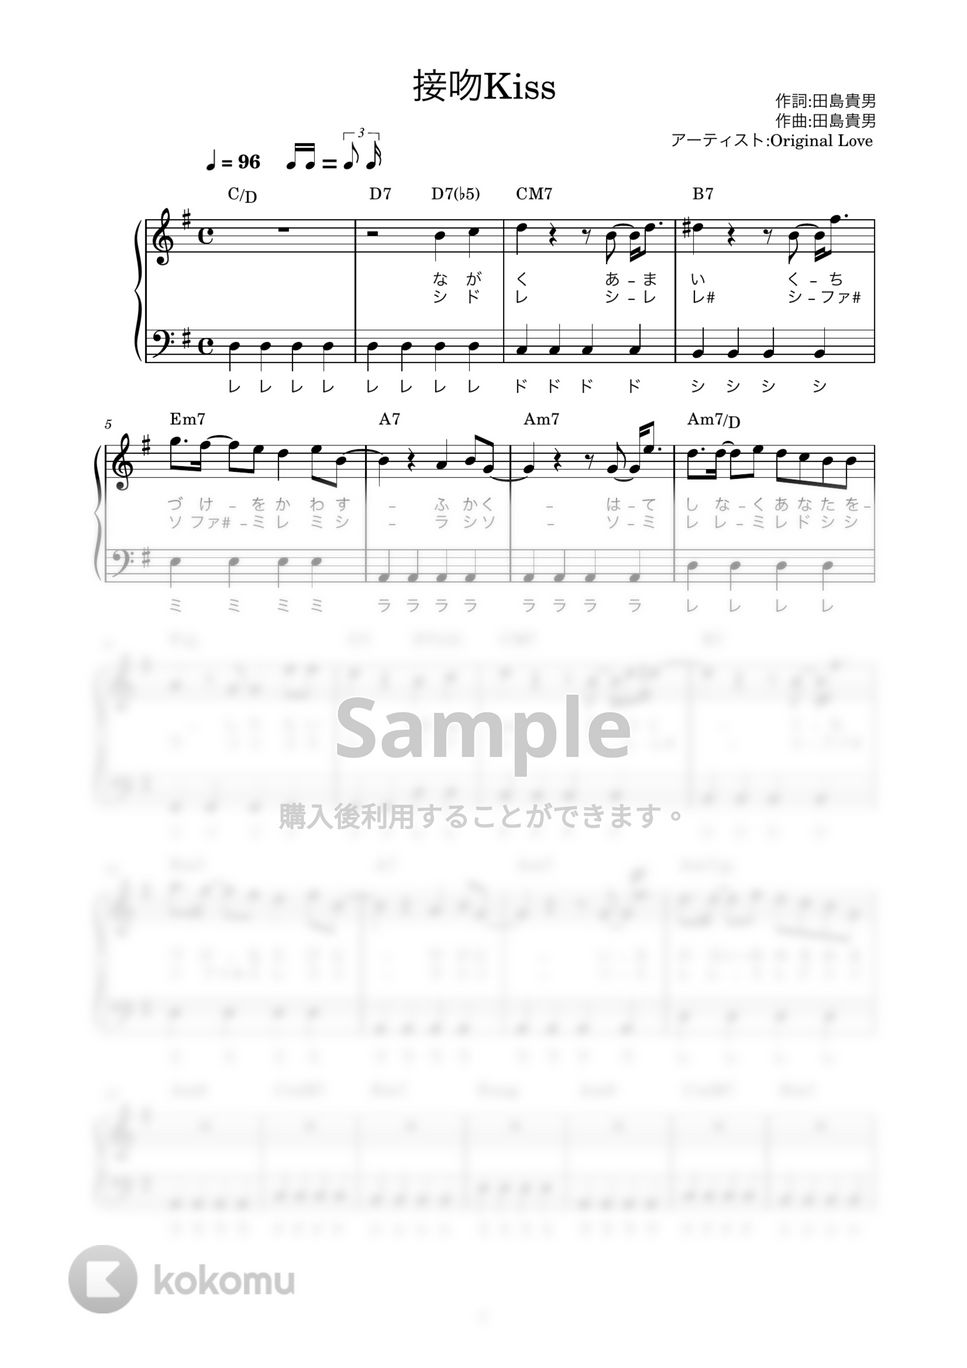 ＯＲＩＧＩＮＡＬ　ＬＯＶＥ - 接吻ＫＩＳＳ (かんたん / 歌詞付き / ドレミ付き / 初心者) by piano.tokyo